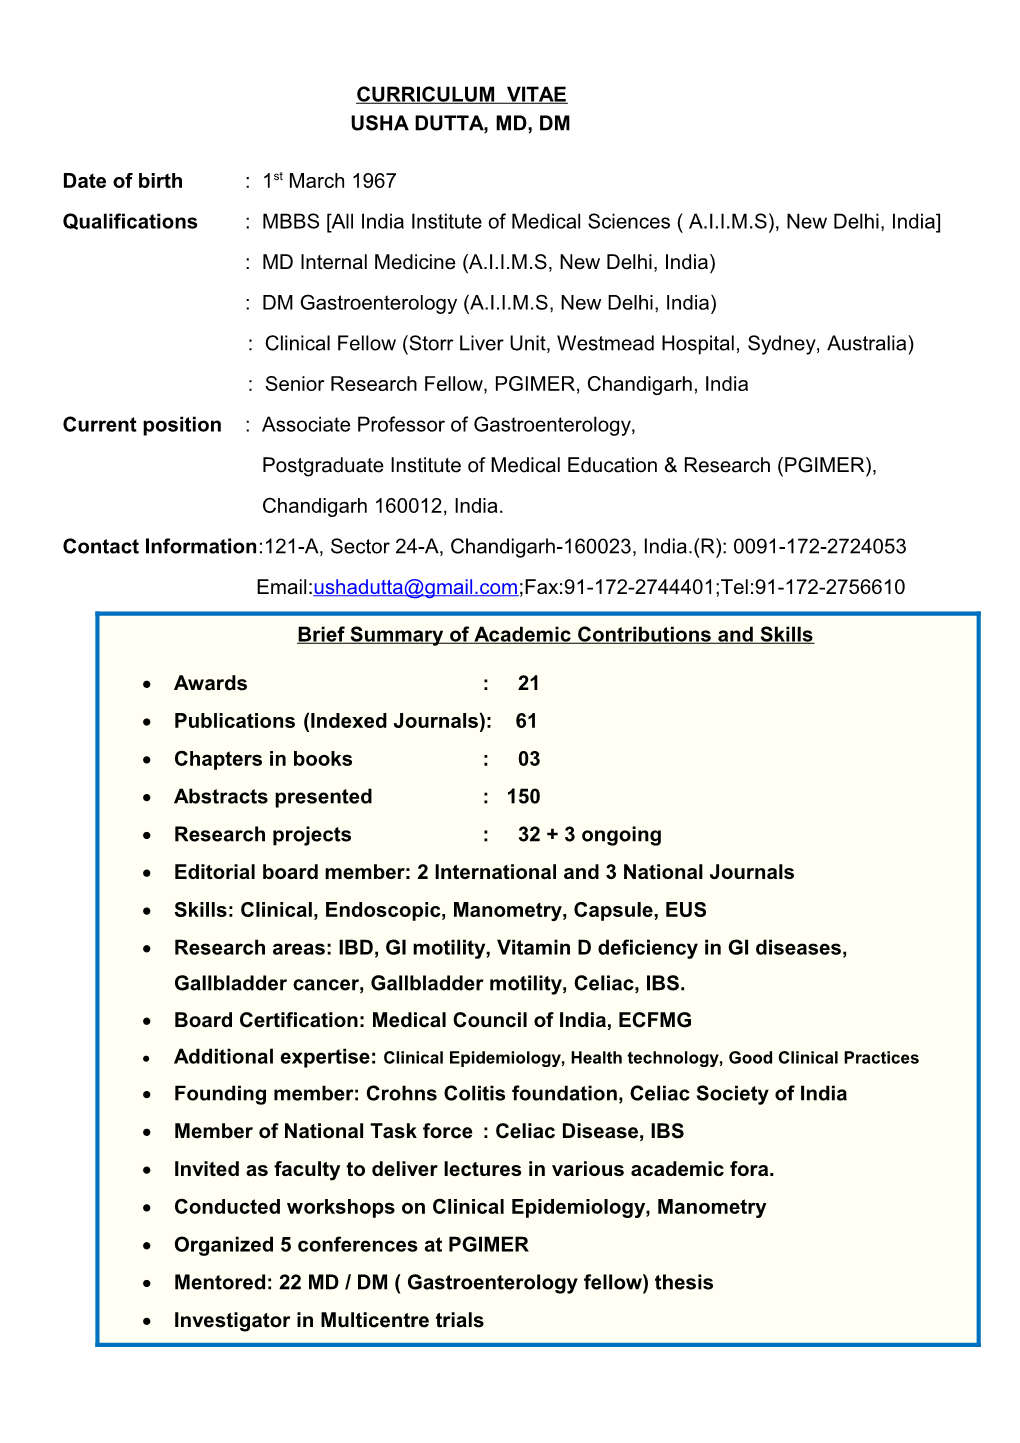 Qualifications : MBBS All India Institute of Medical Sciences ( A.I.I.M.S), New Delhi, India